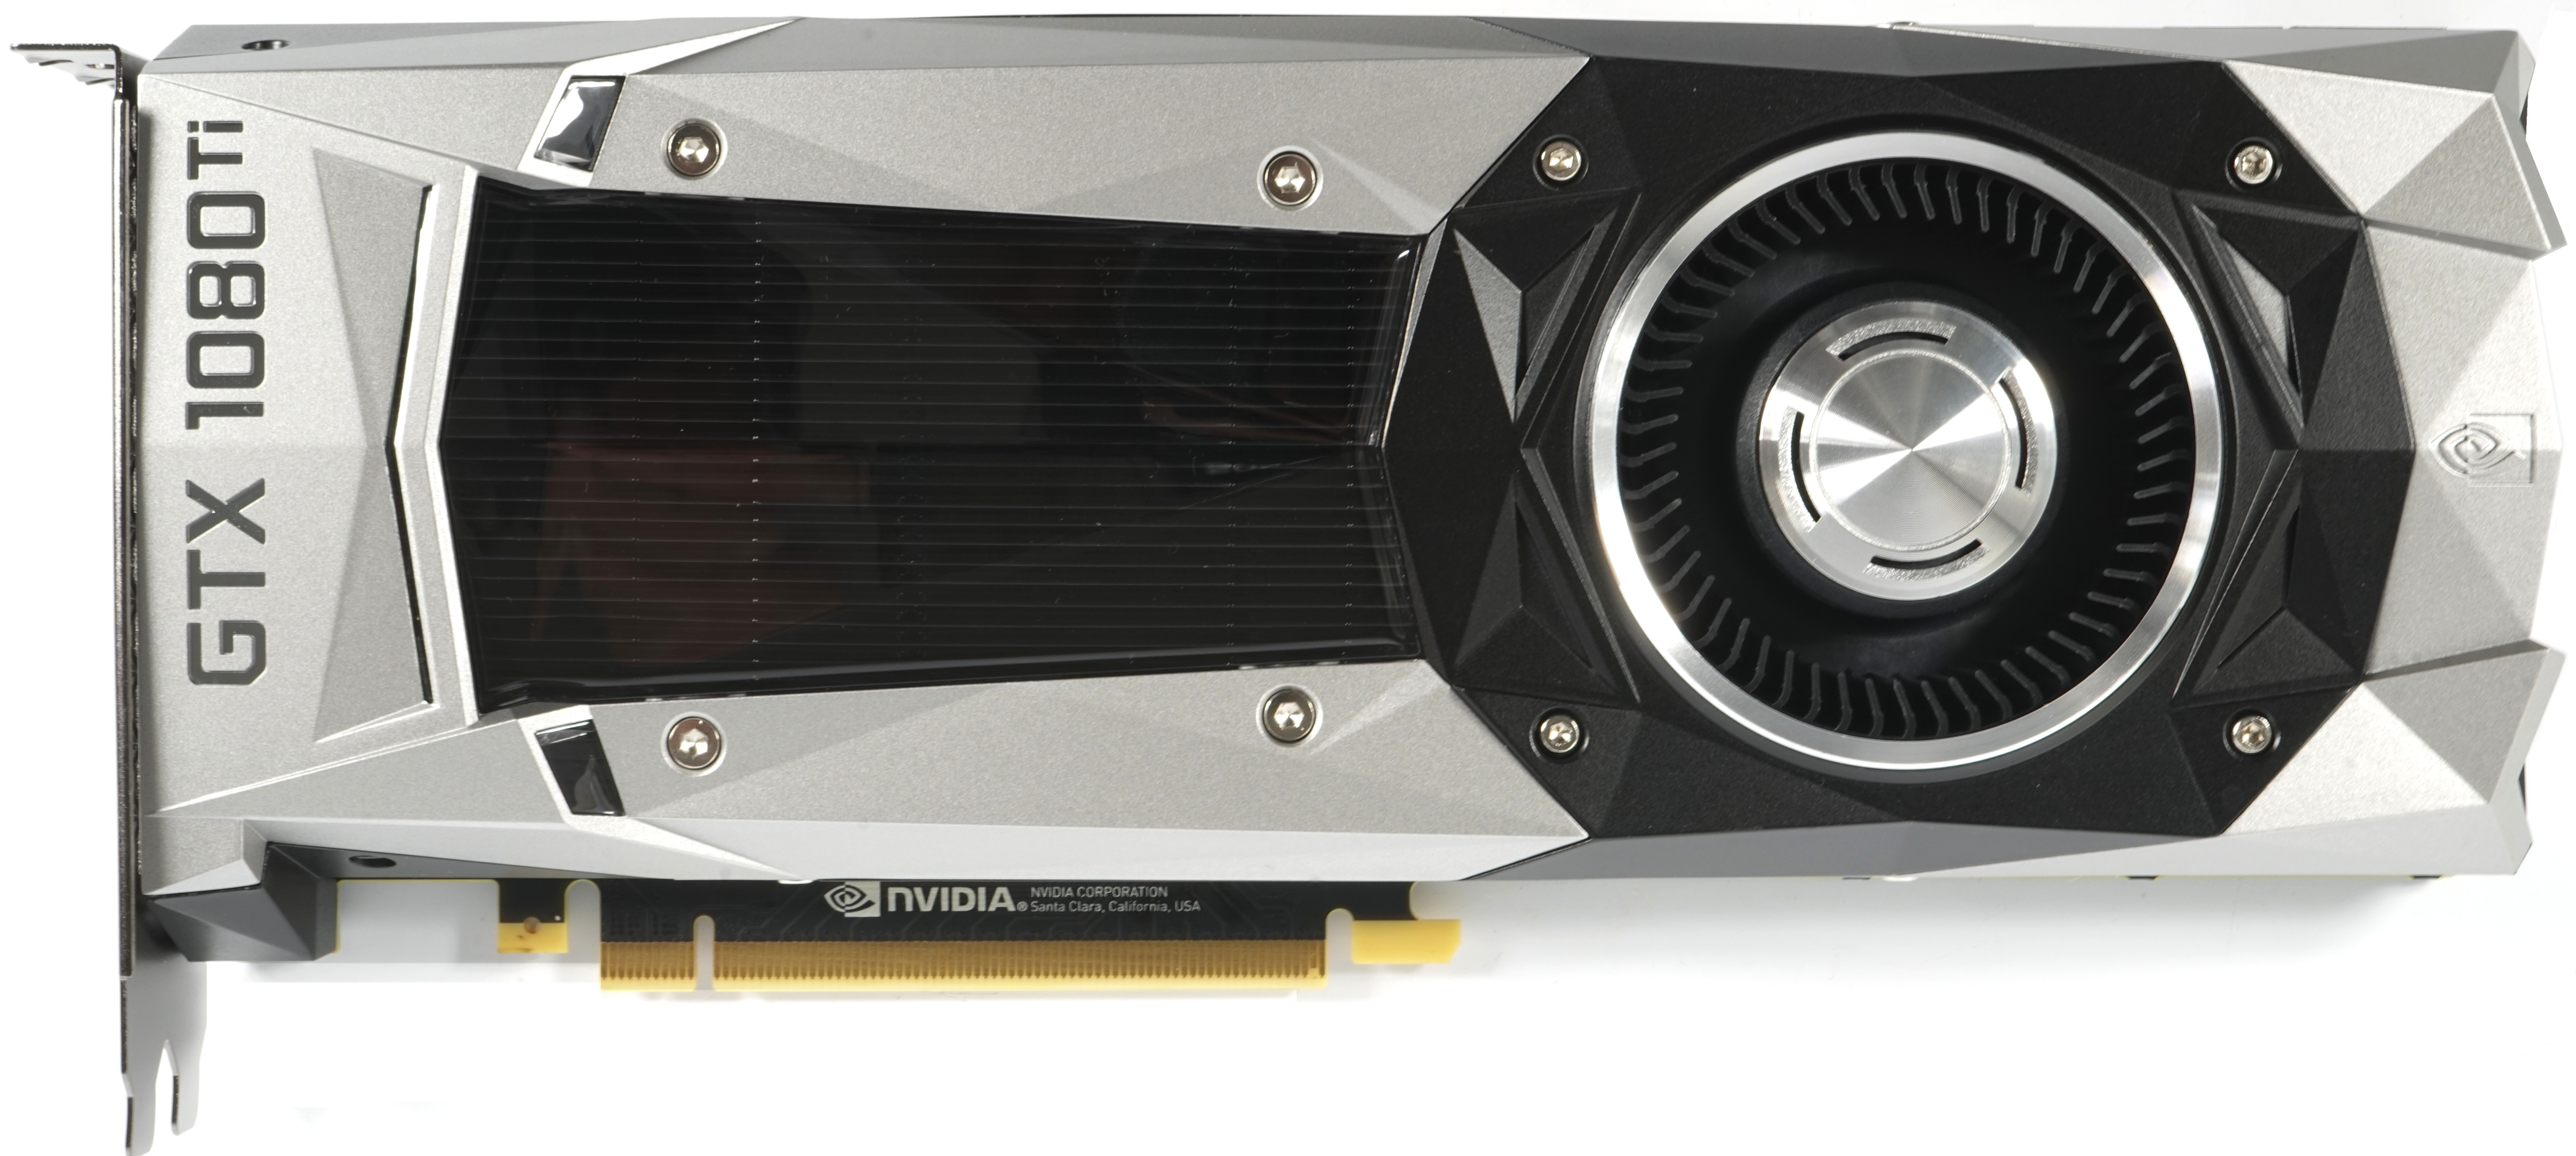 Nvidia GeForce GTX 1080 Ti 11GB in review | igor´sLAB